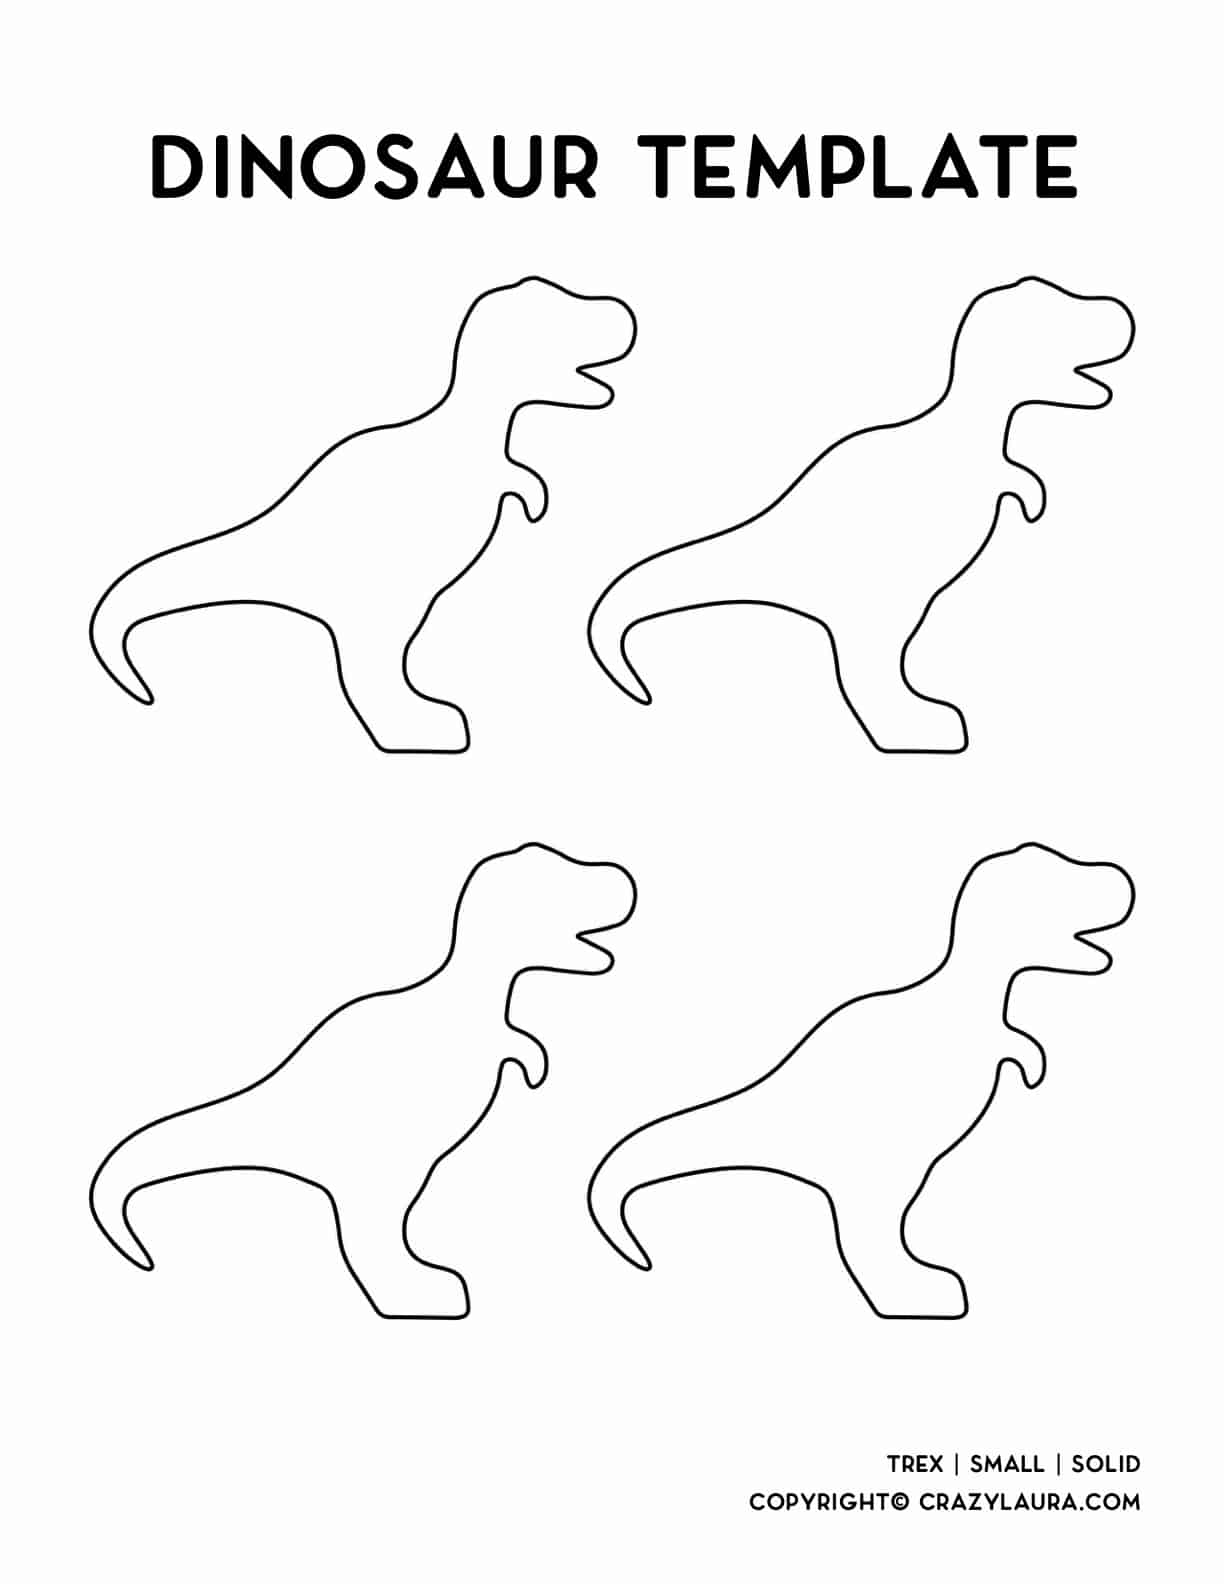 small sized trex dinosaur printable